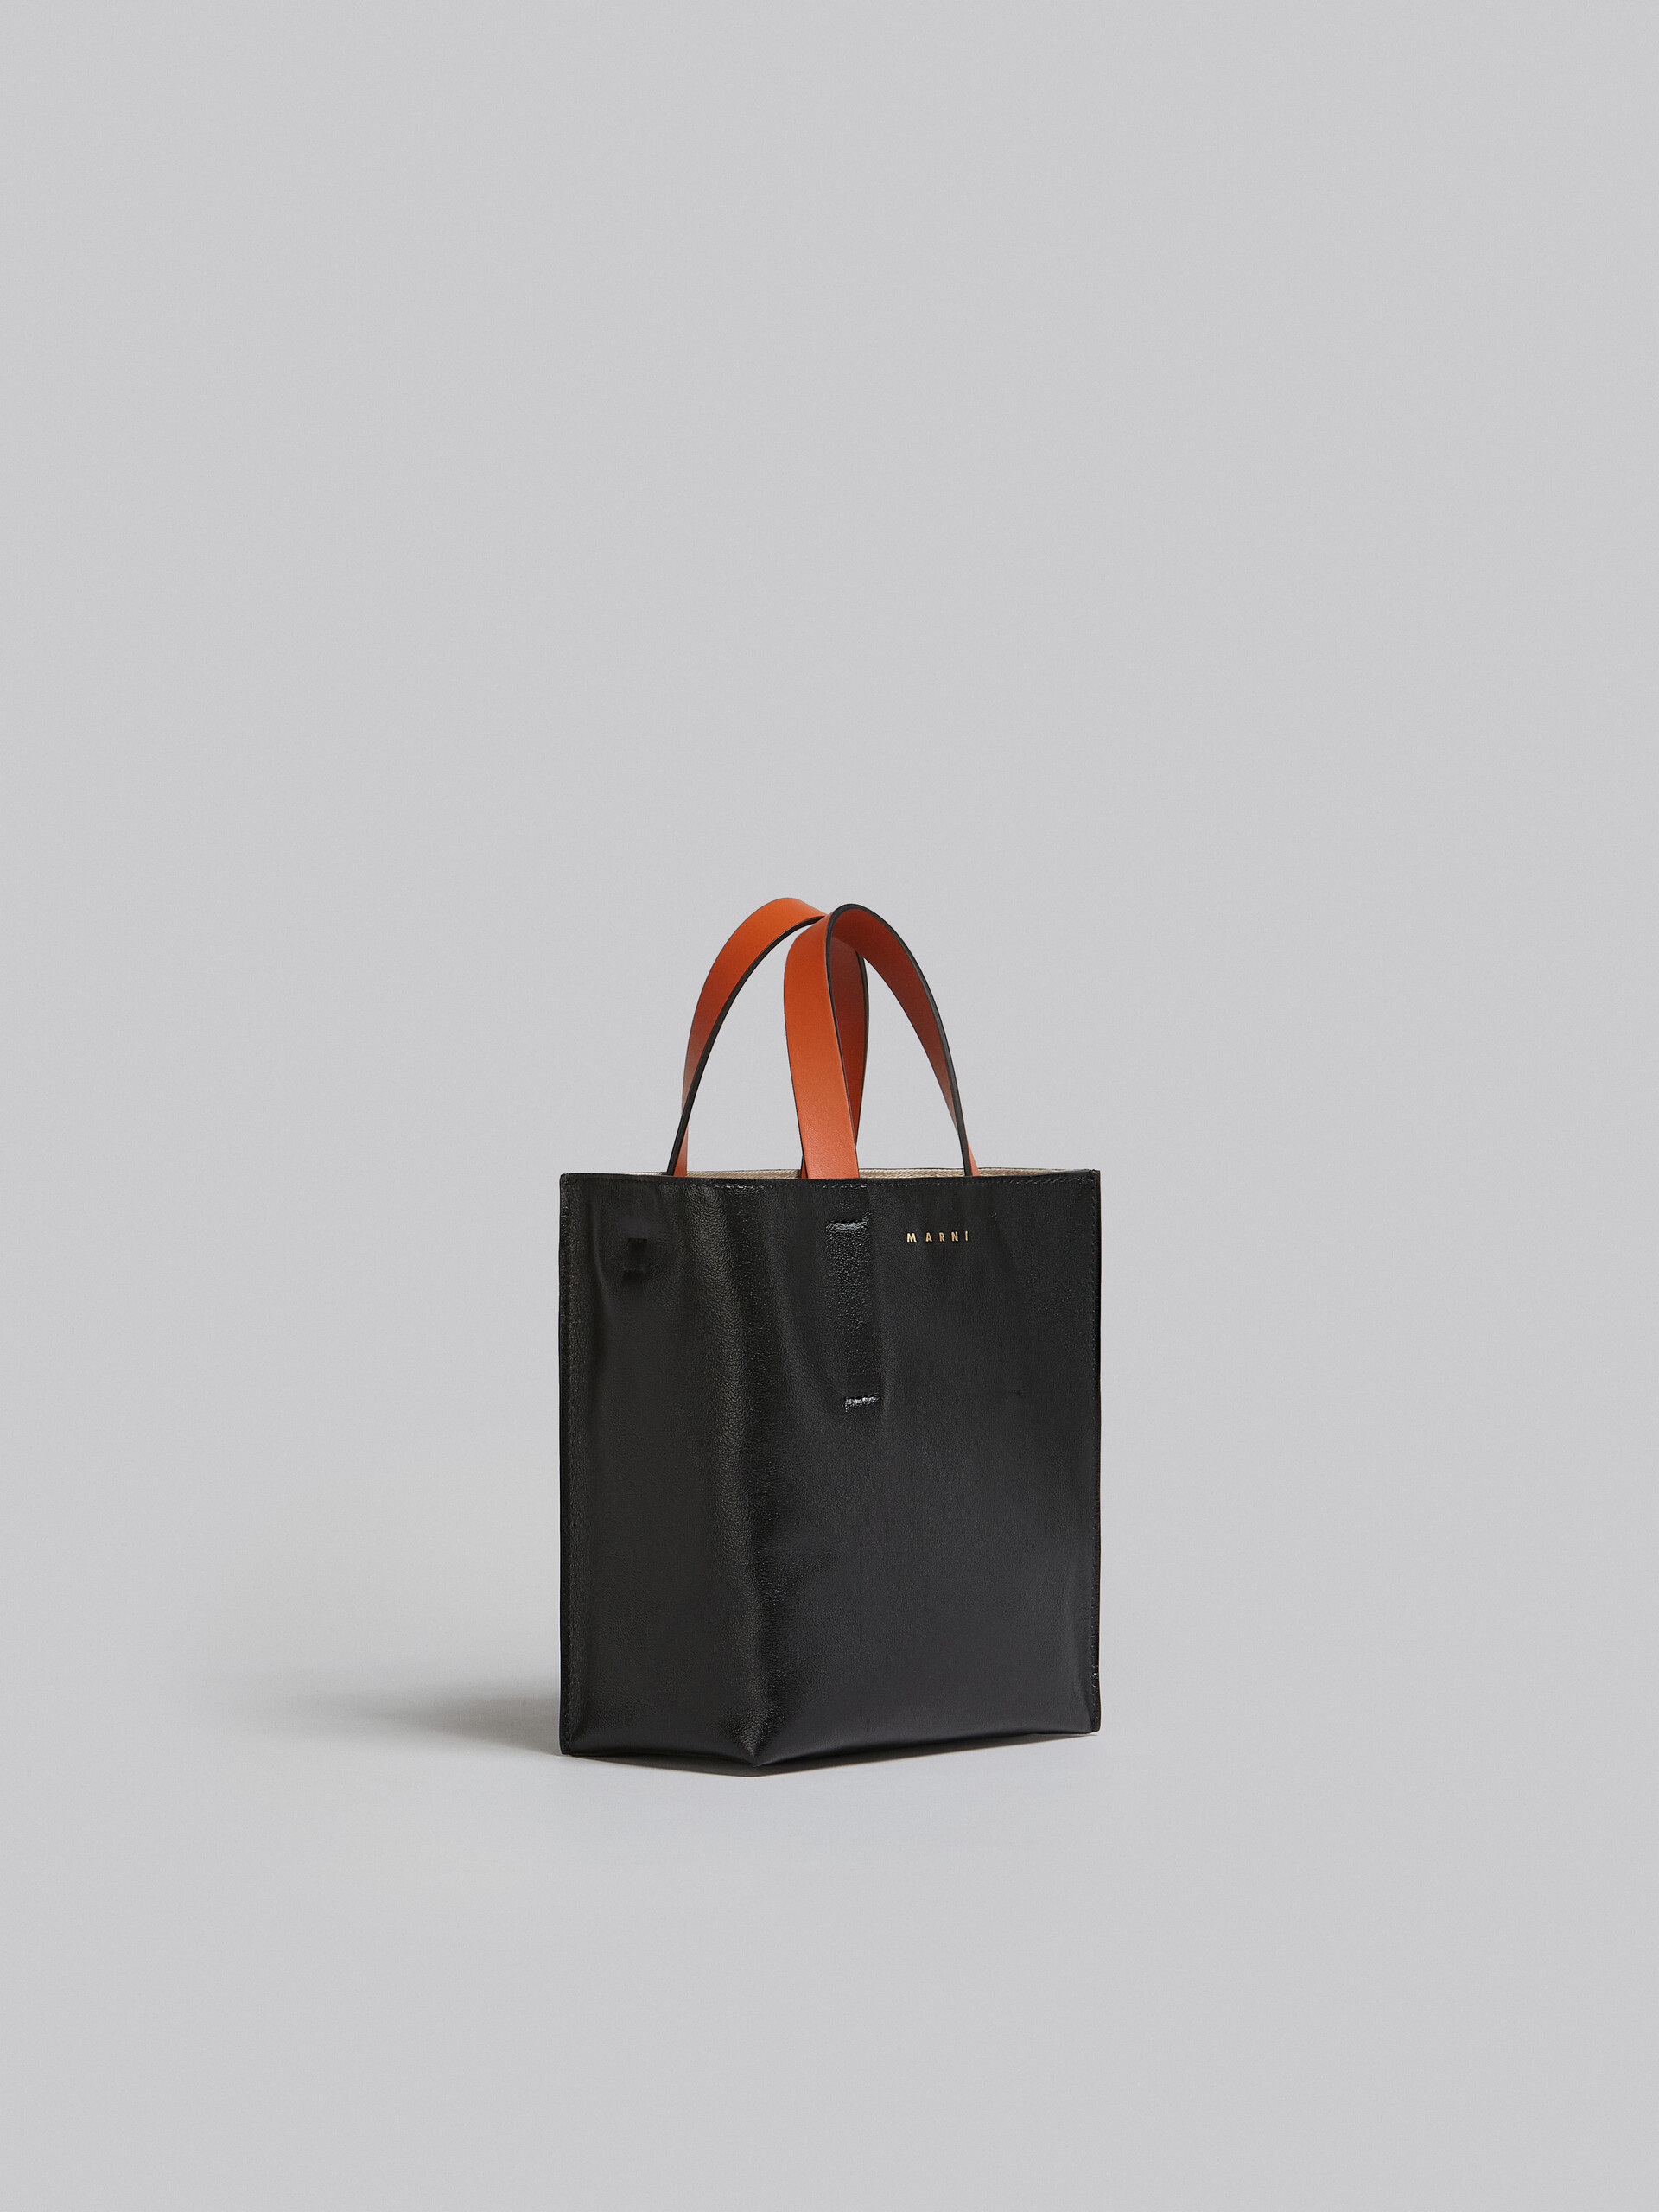 Museo Soft Bag Mini in pelle grigia nera e bordeaux - Borse shopping - Image 6